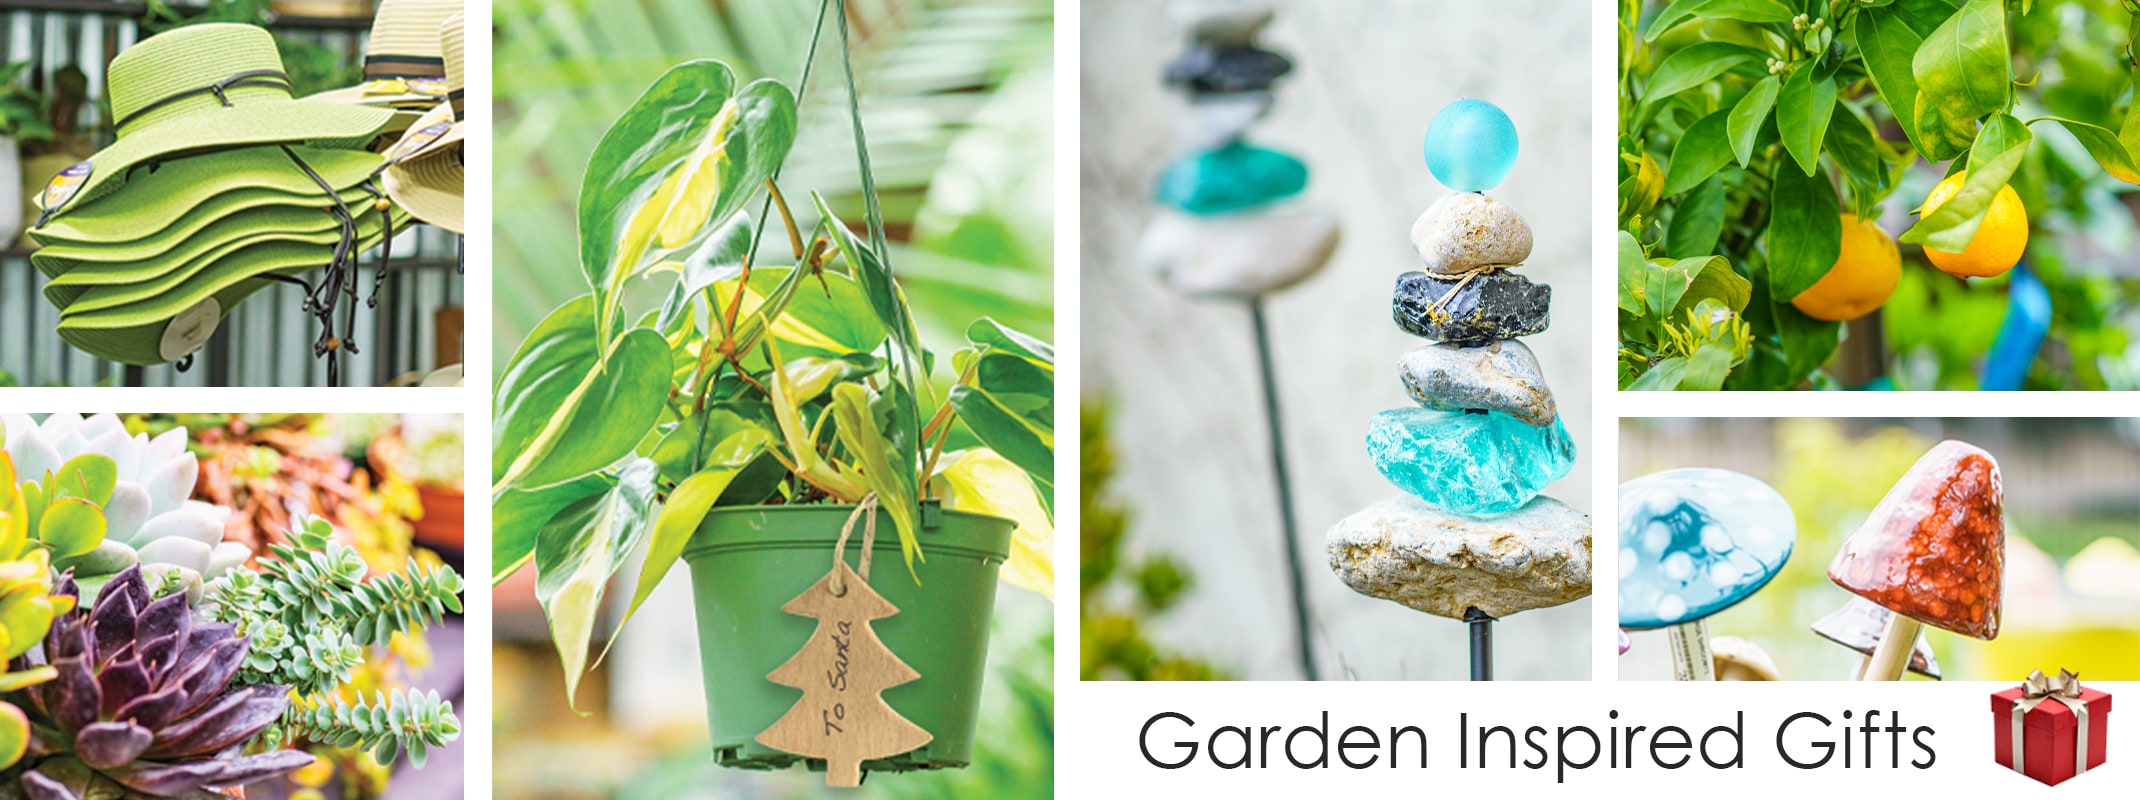 garden inspired gifts featuring garden hats, succulents, houseplants, garden decor and citrus